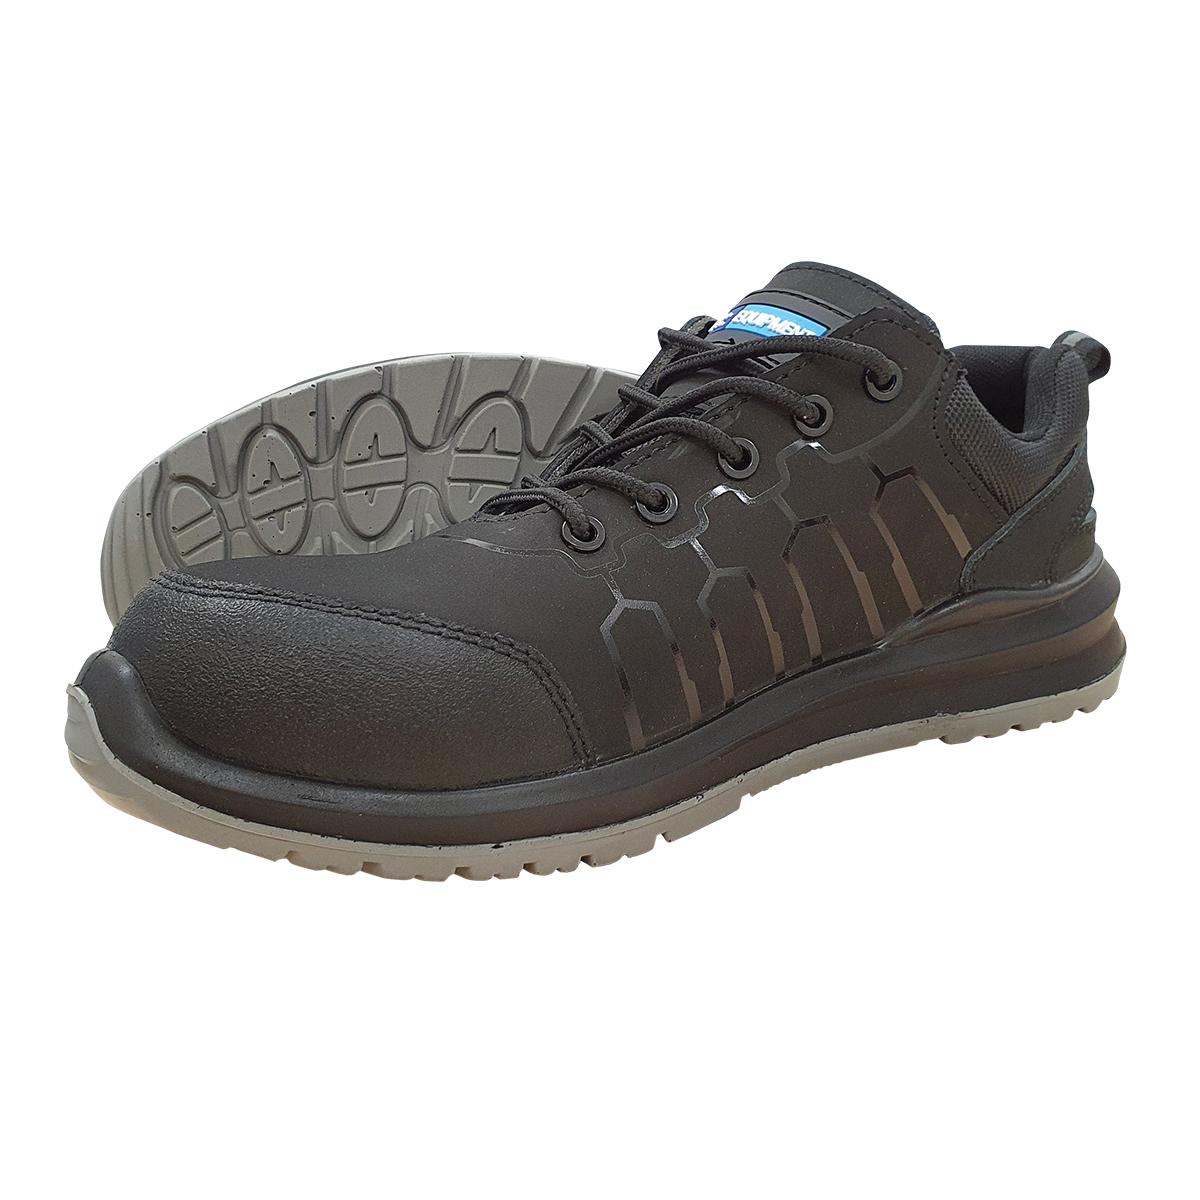 Pantofi protectie RTC, S3 ESD, Madeira, marime 37